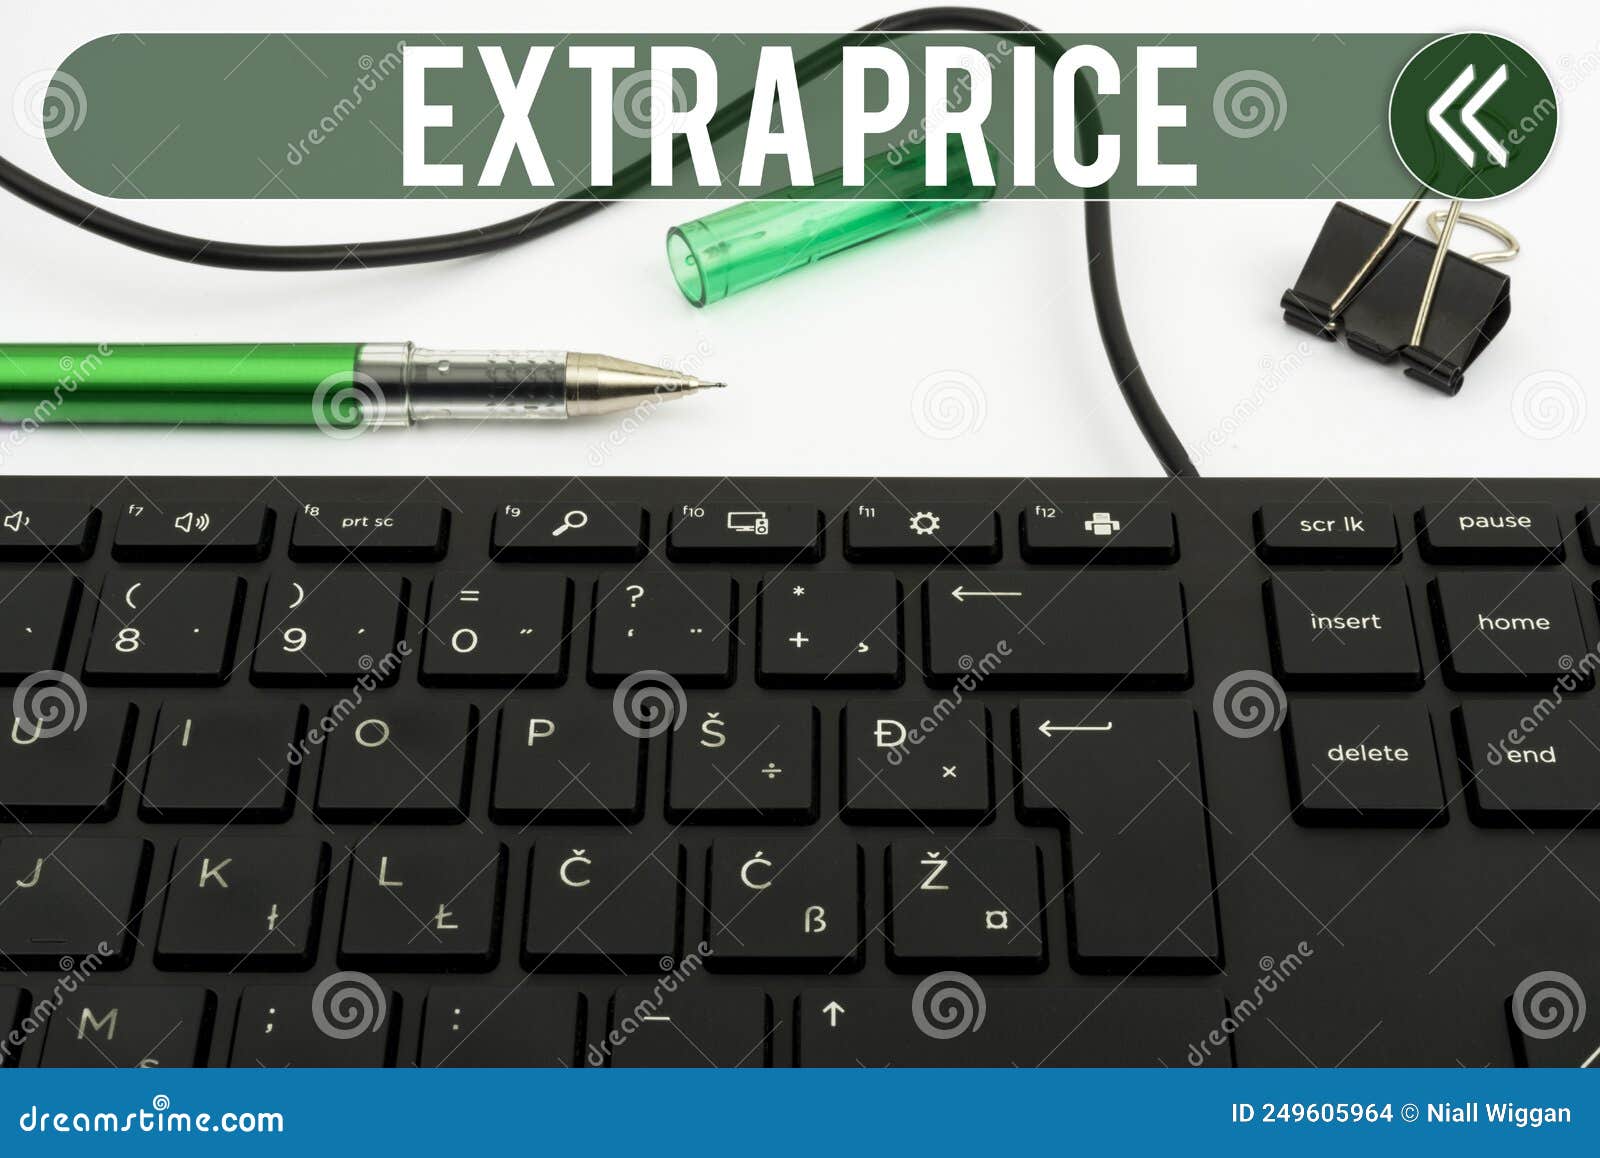 define extended price